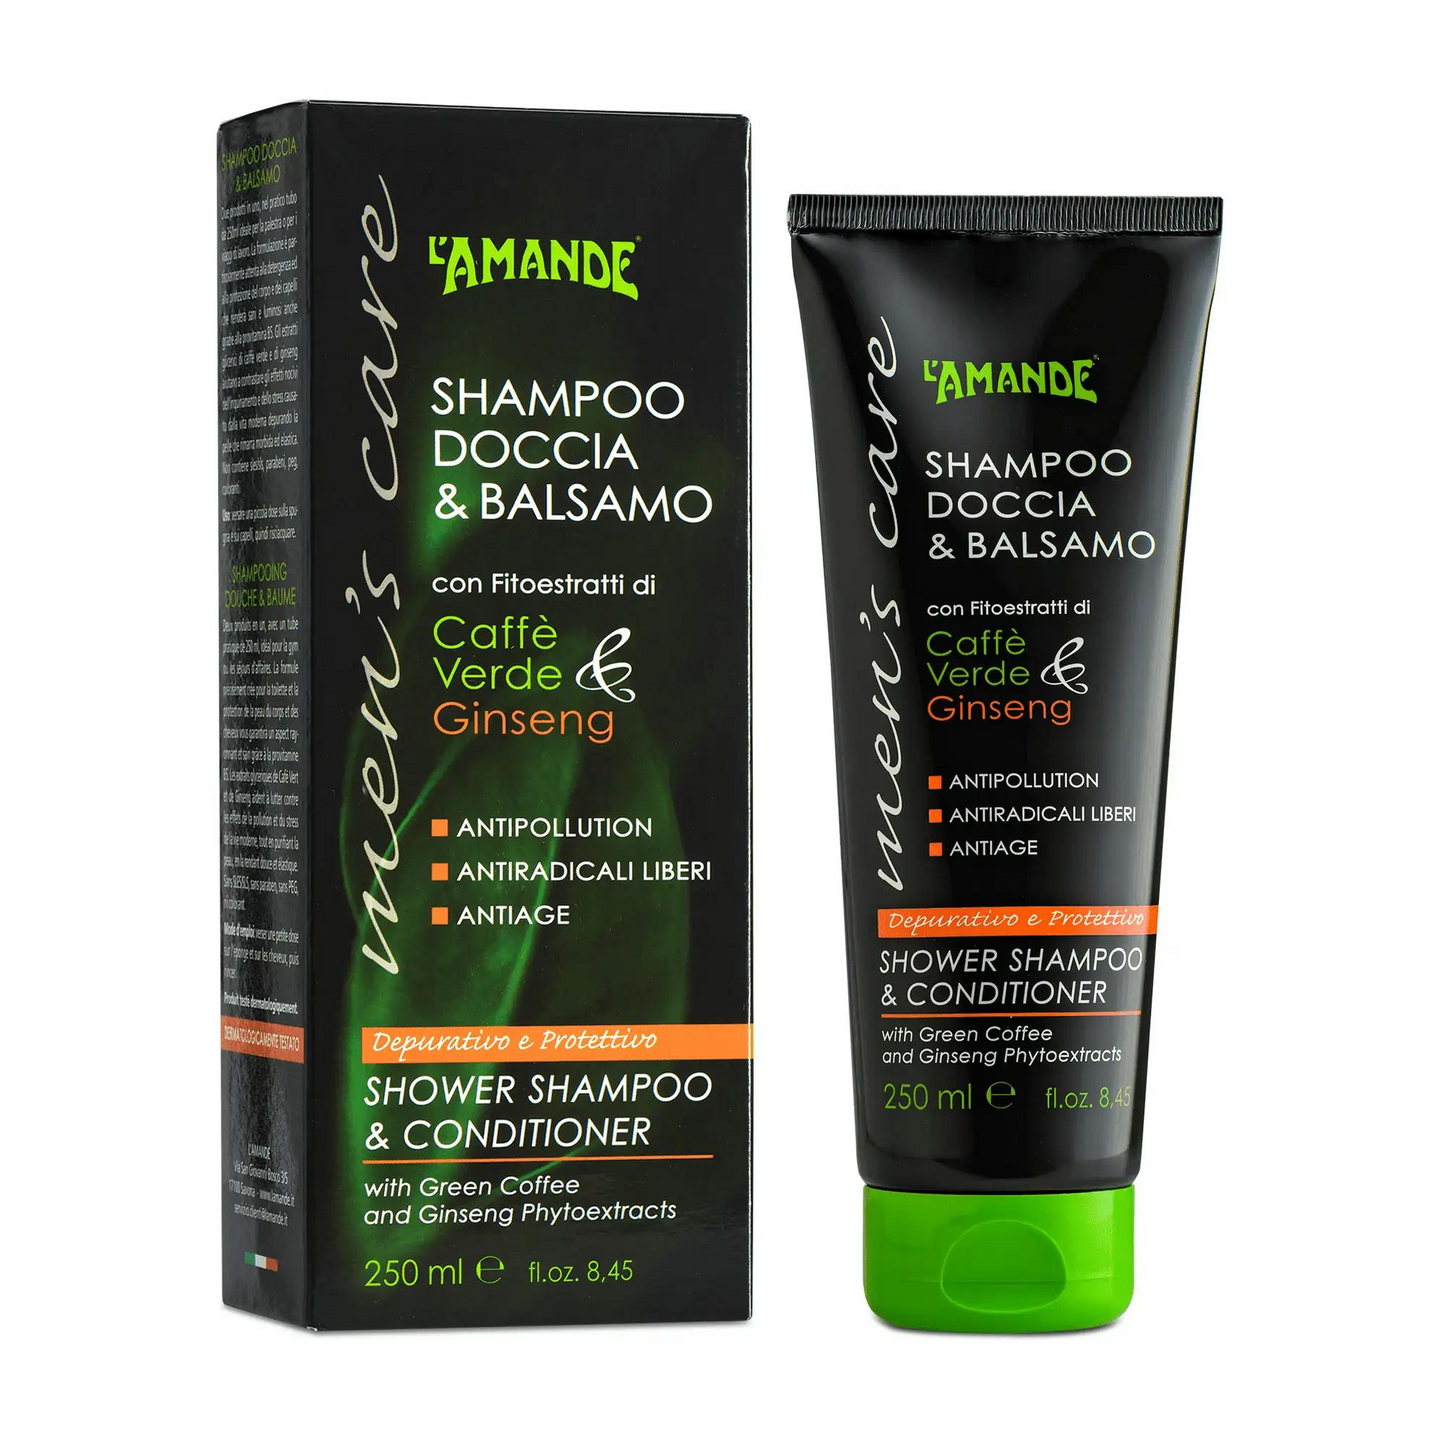 Primary Image of L'amande Mens Care Shampoo & Conditioner (250 ml)